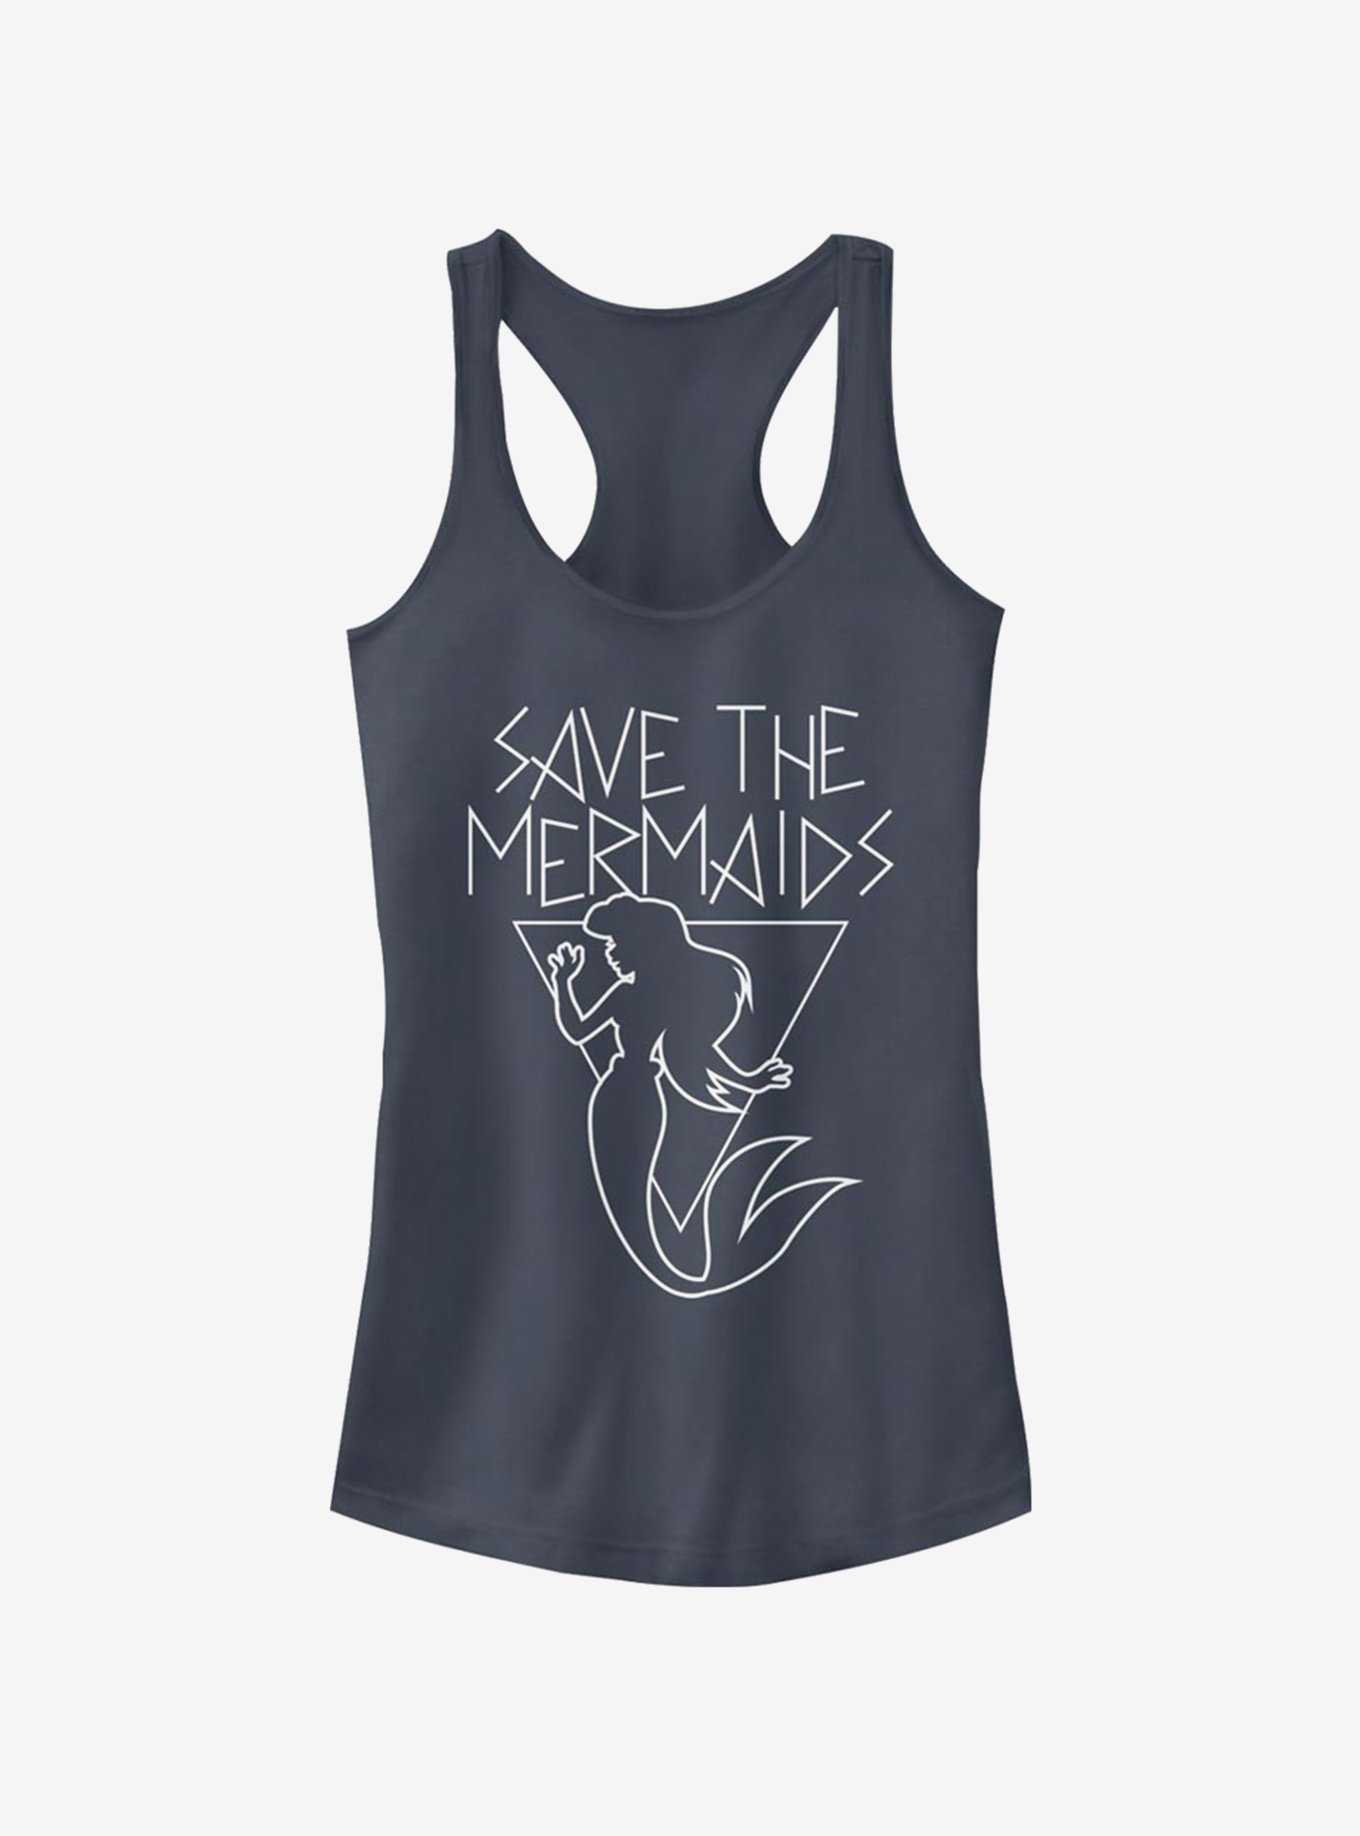 Disney The Little Mermaid Save The Mermaids Girls Tank, , hi-res